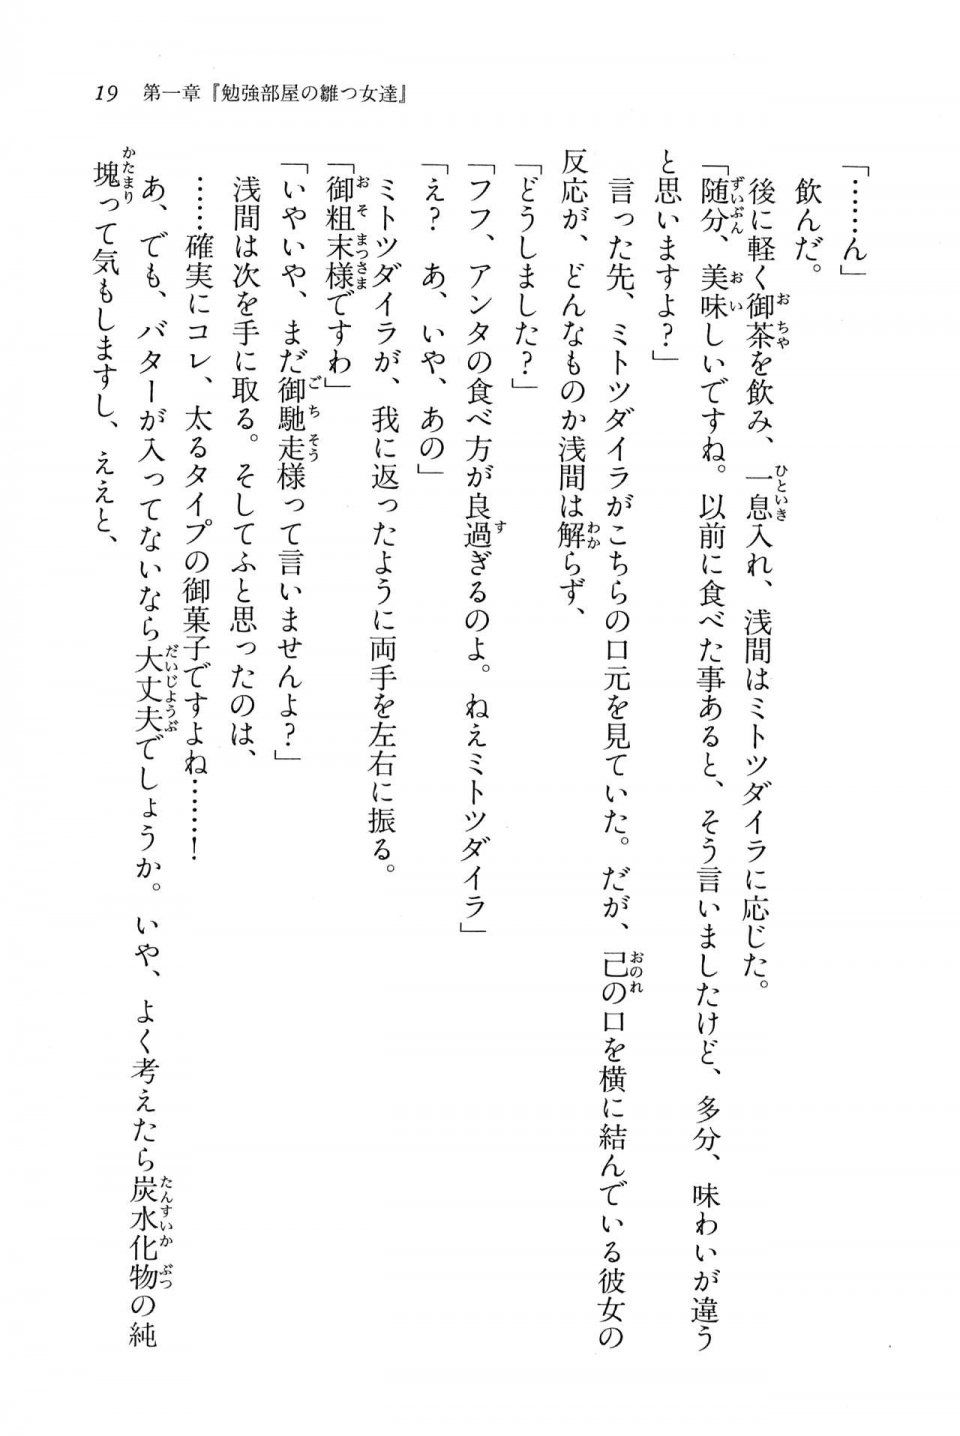 Kyoukai Senjou no Horizon BD Special Mininovel Vol 7(4A) - Photo #23